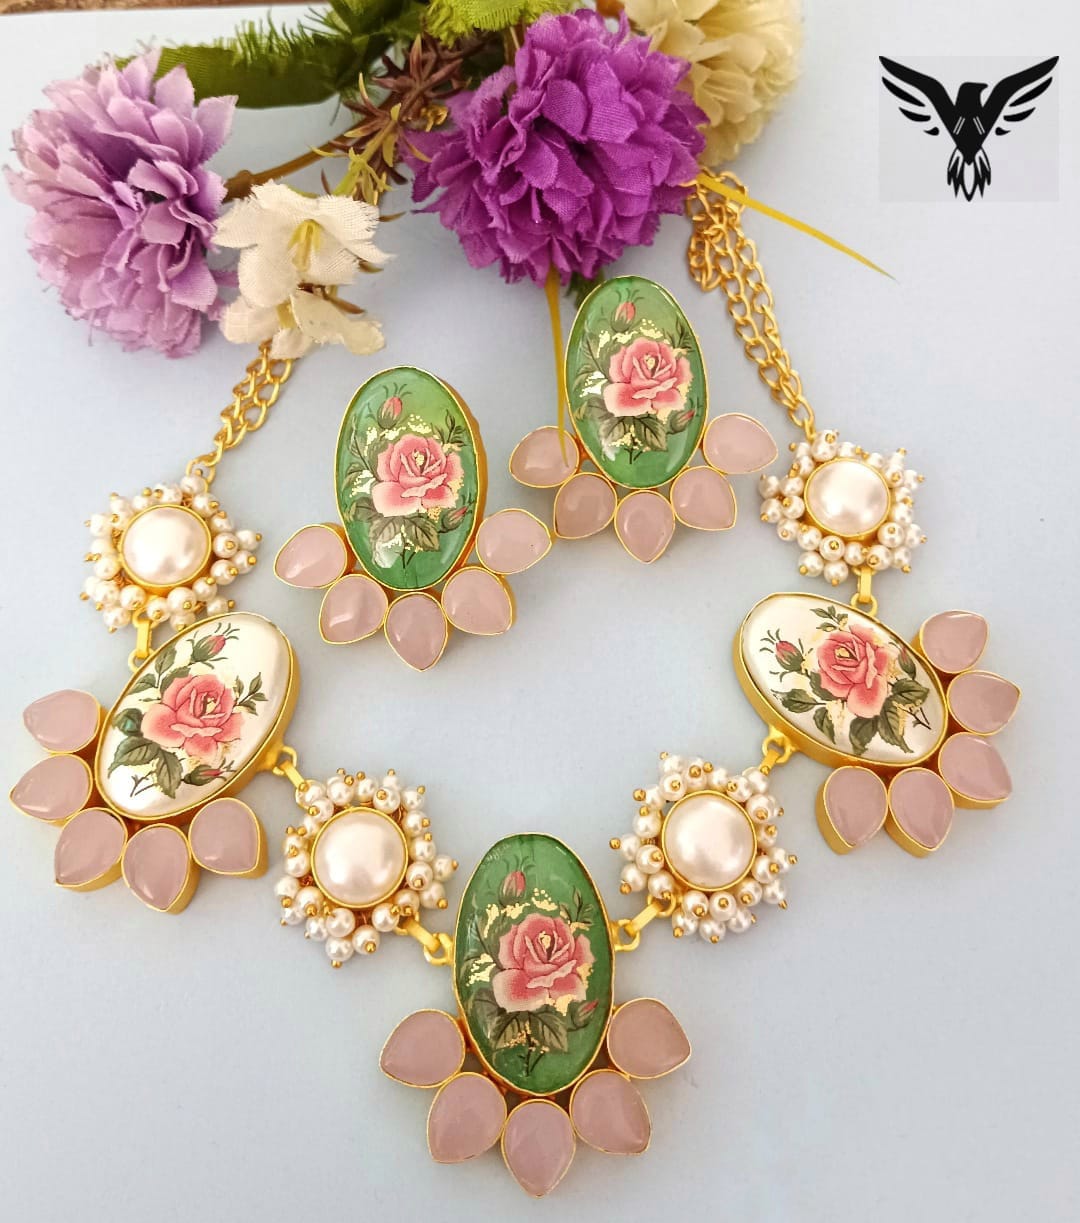 Senorita necklace in hues of pastels